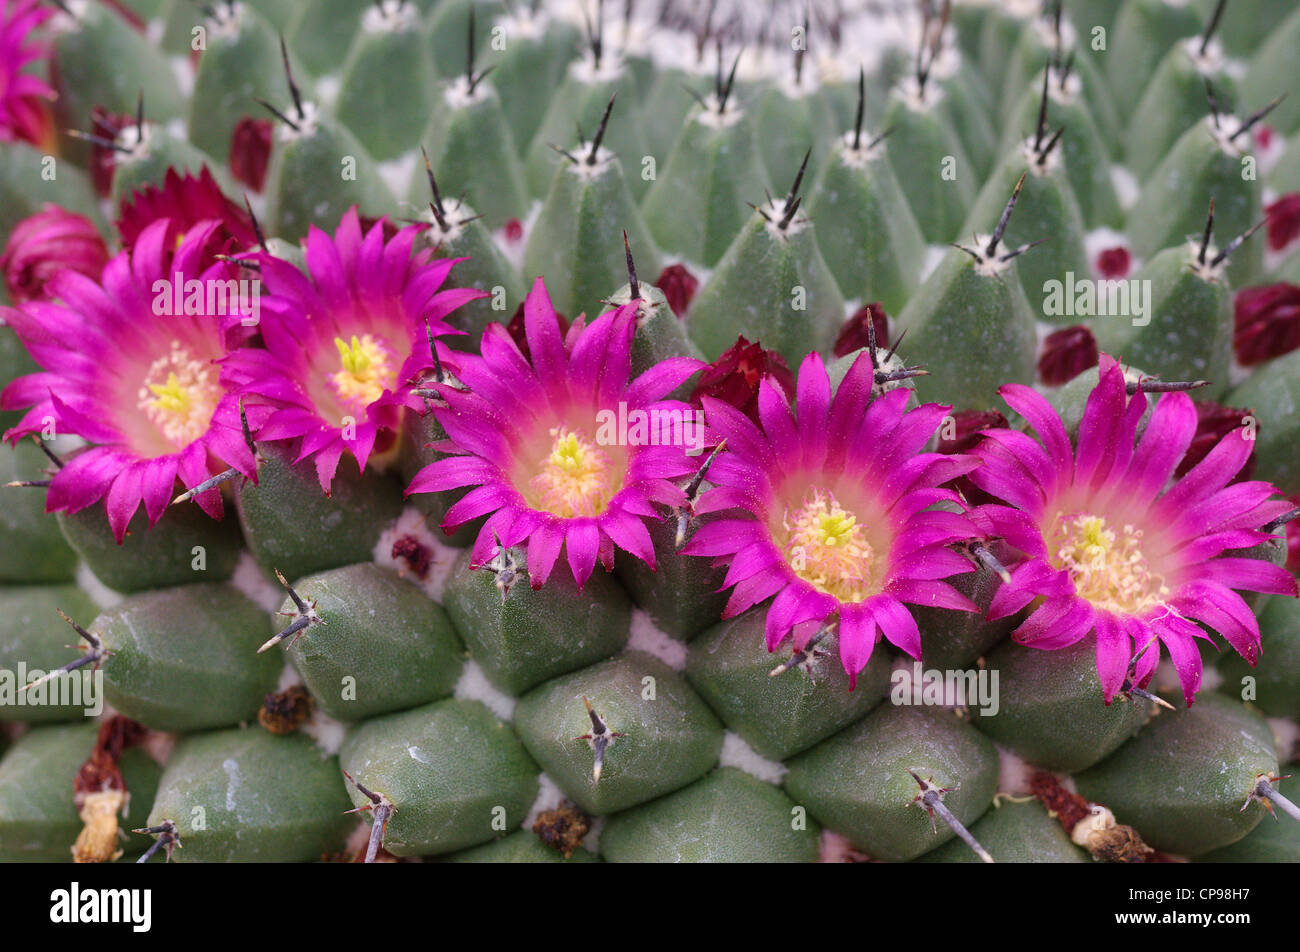 Cactus Mammillaria Mamillaria seitziana purple flowers close up Stock Photo